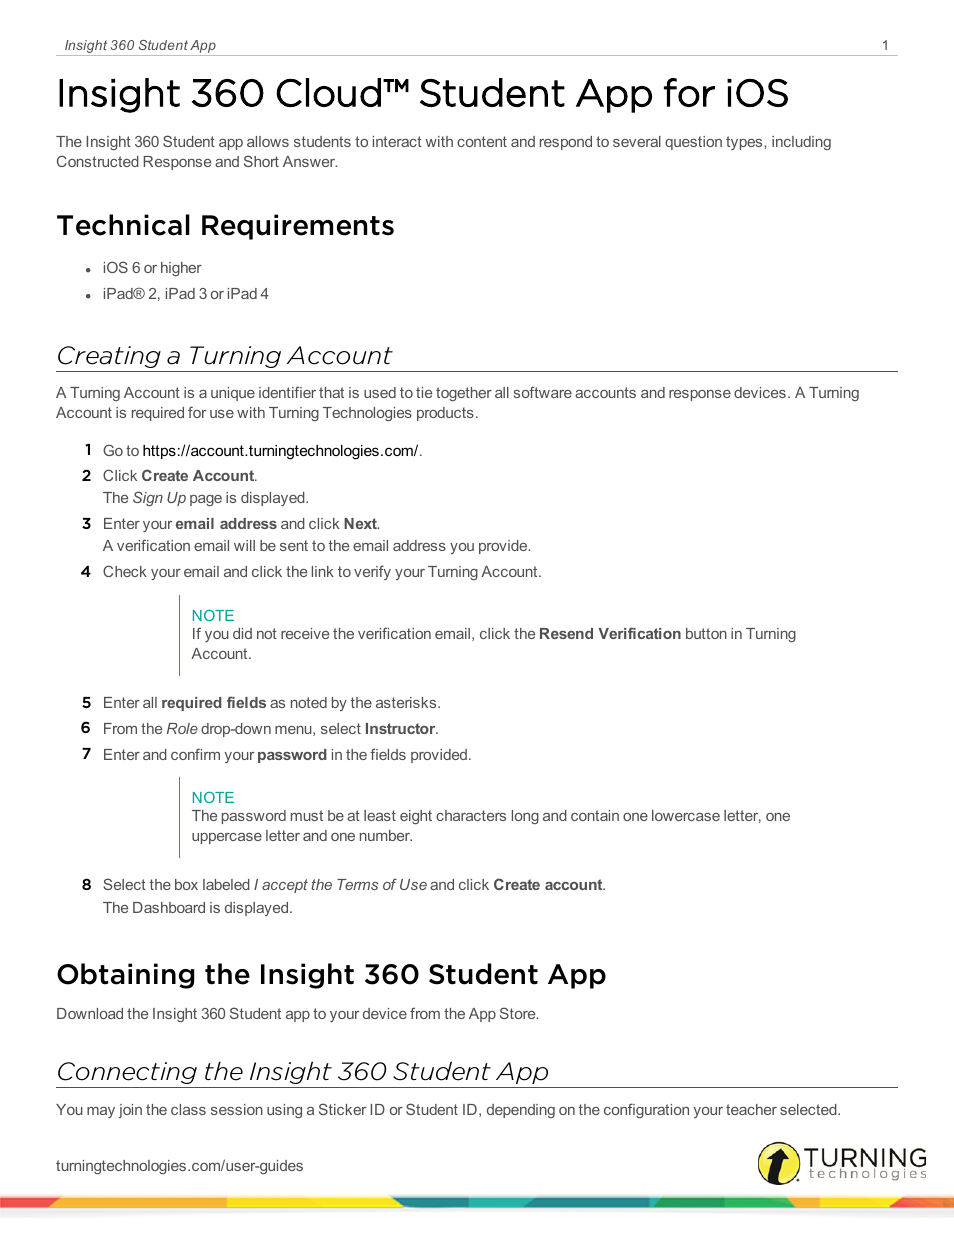 iOS Student App